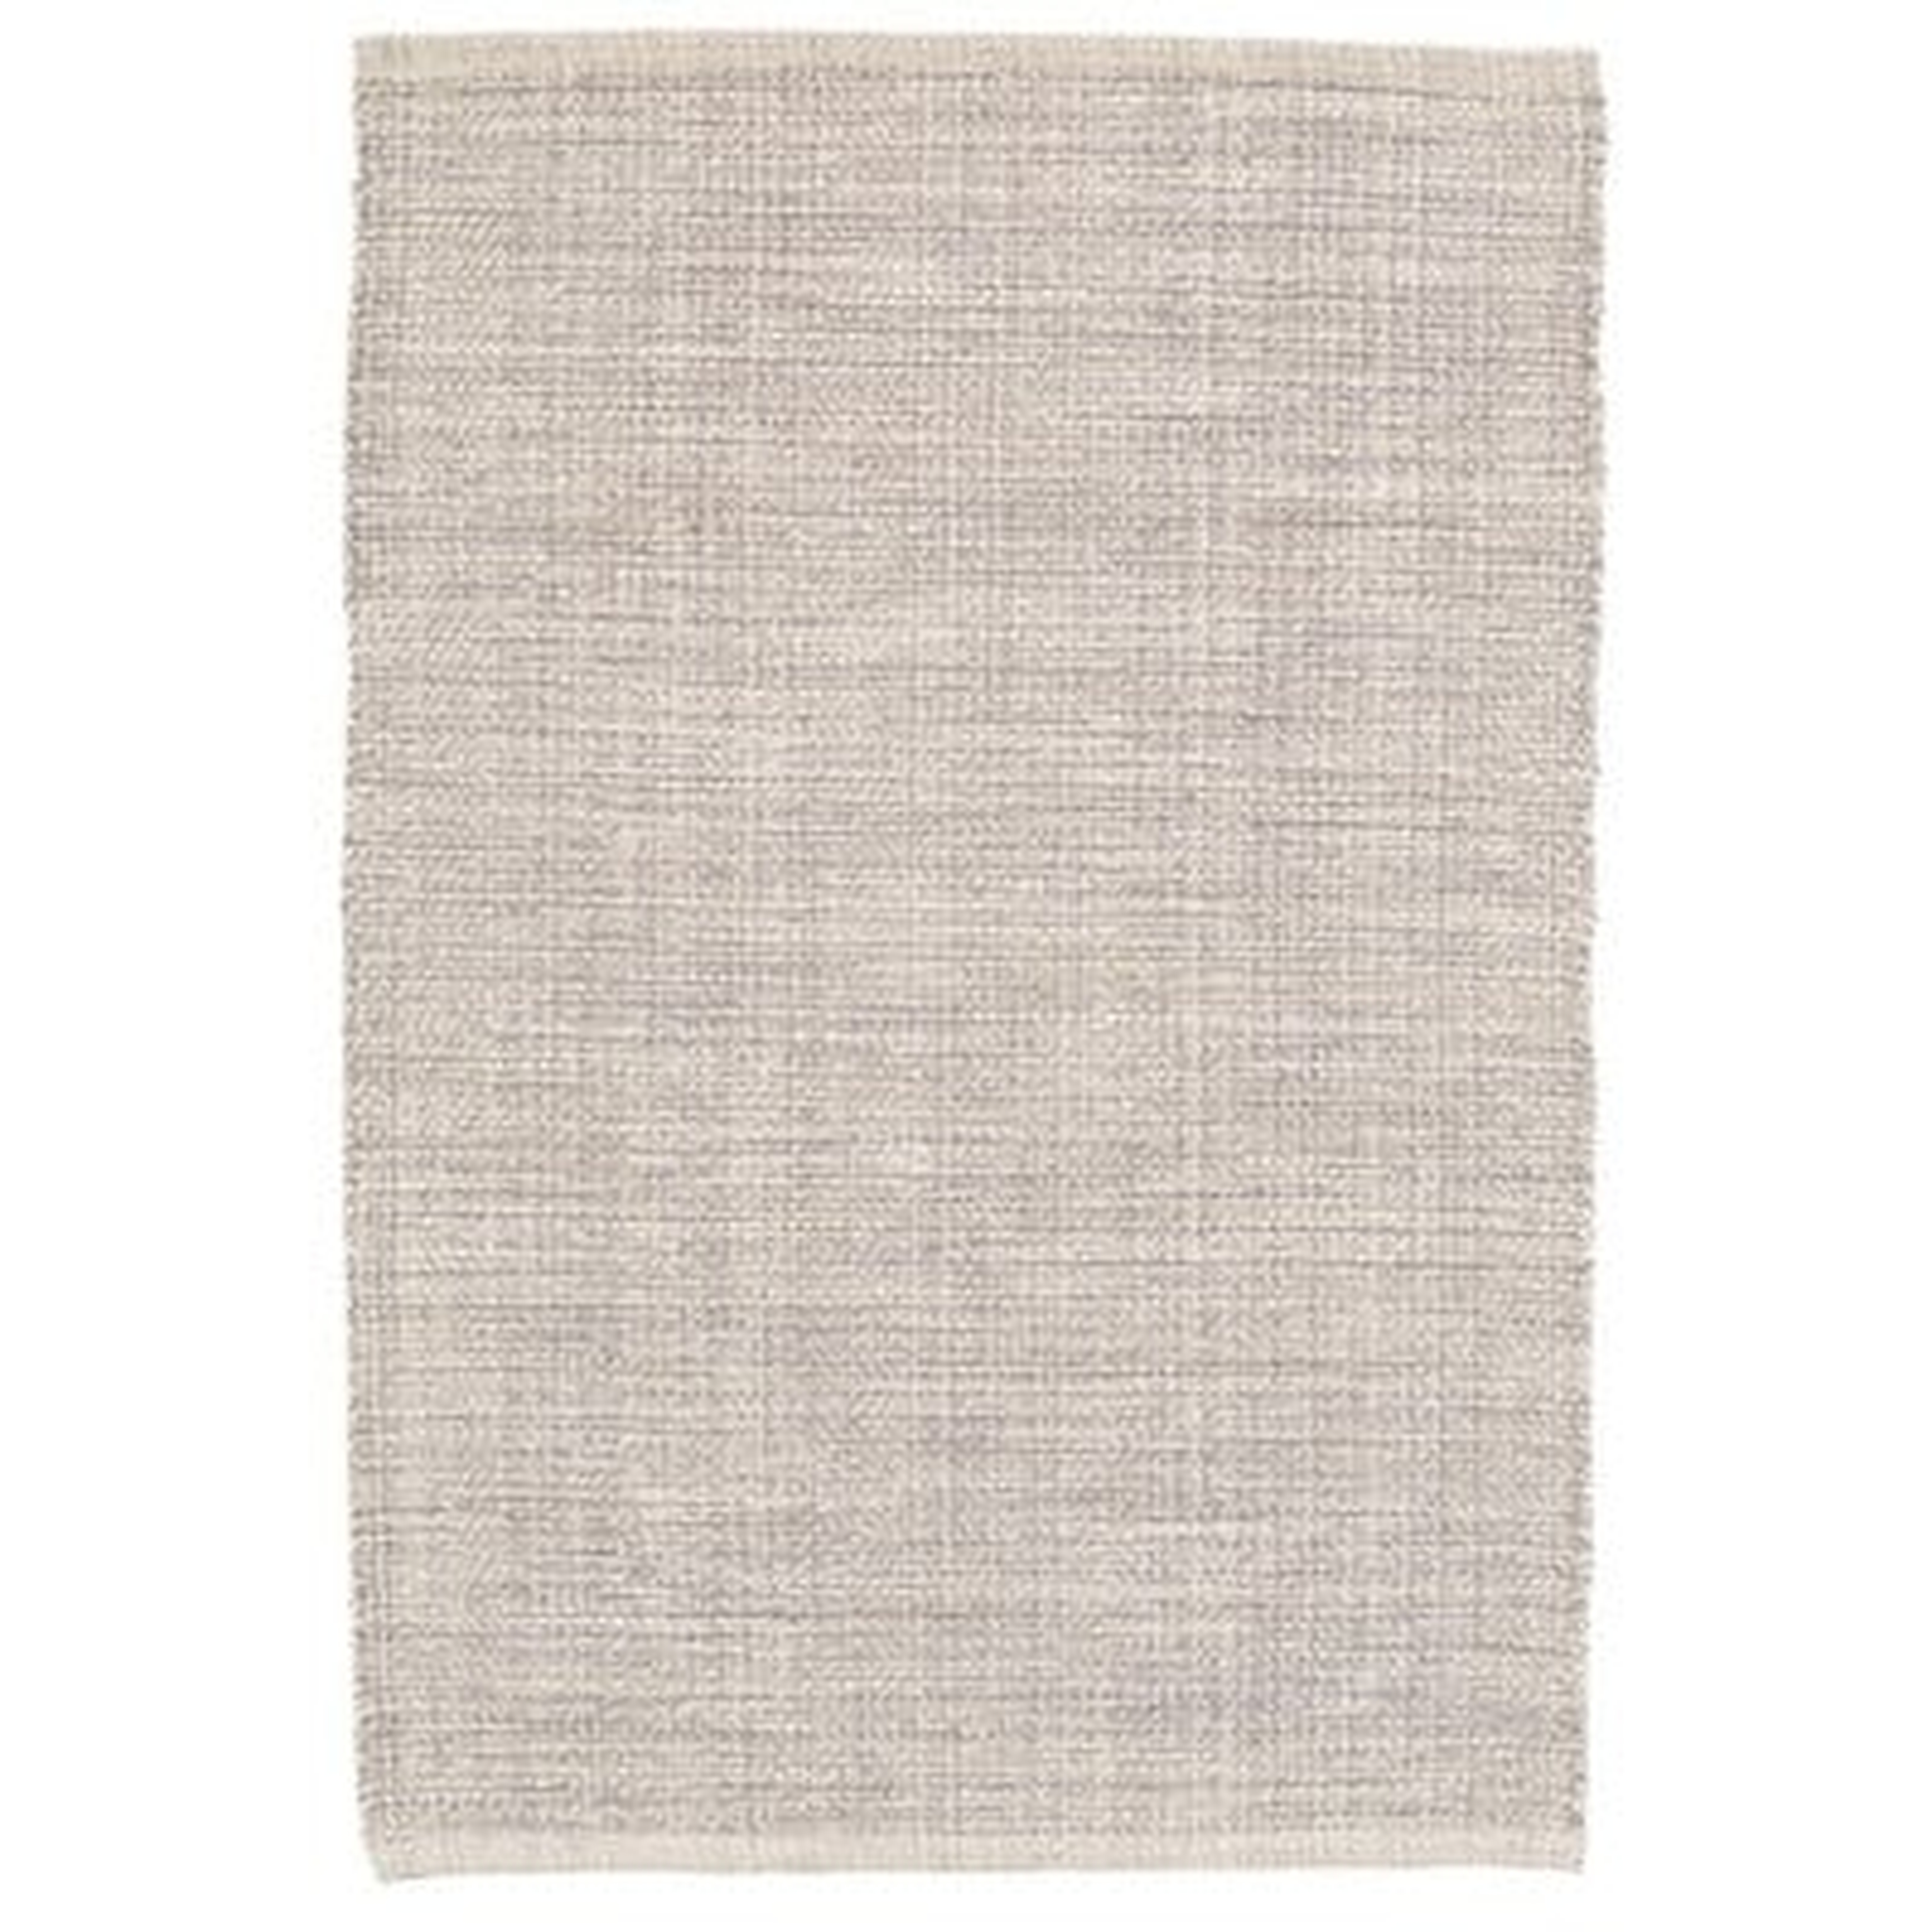 Marled Cotton Area Rug, Gray, 9' x 12' - Wayfair